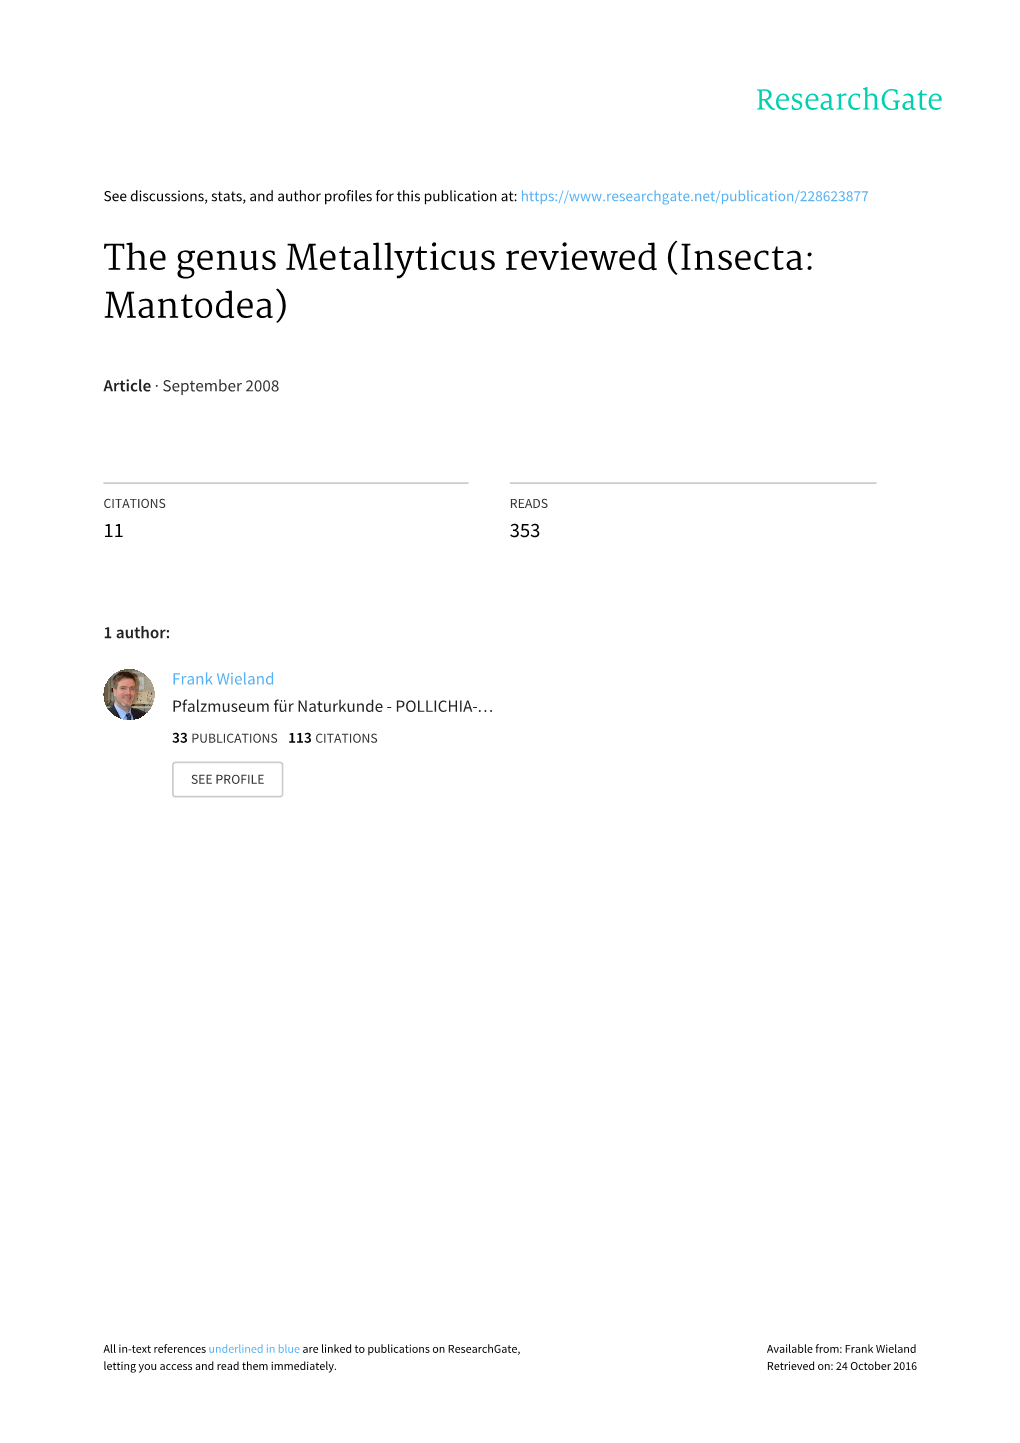 The Genus Metallyticus Reviewed (Insecta: Mantodea)